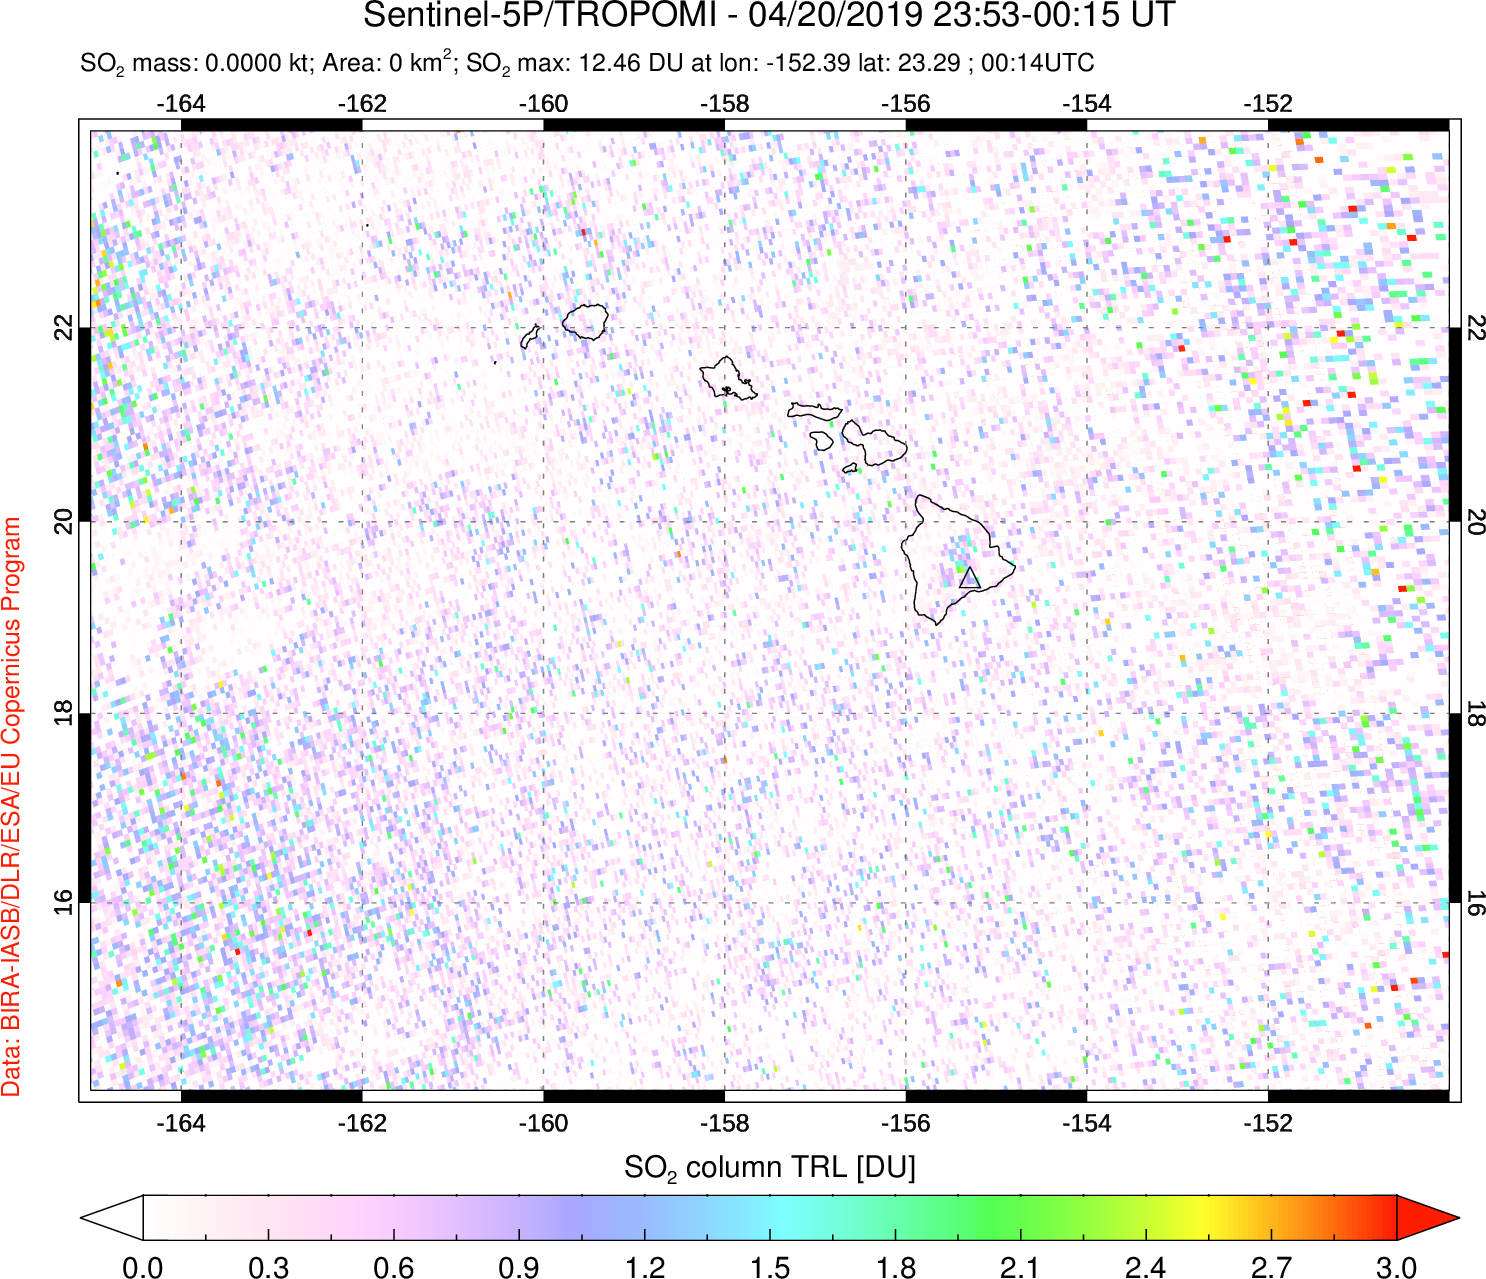 A sulfur dioxide image over Hawaii, USA on Apr 20, 2019.